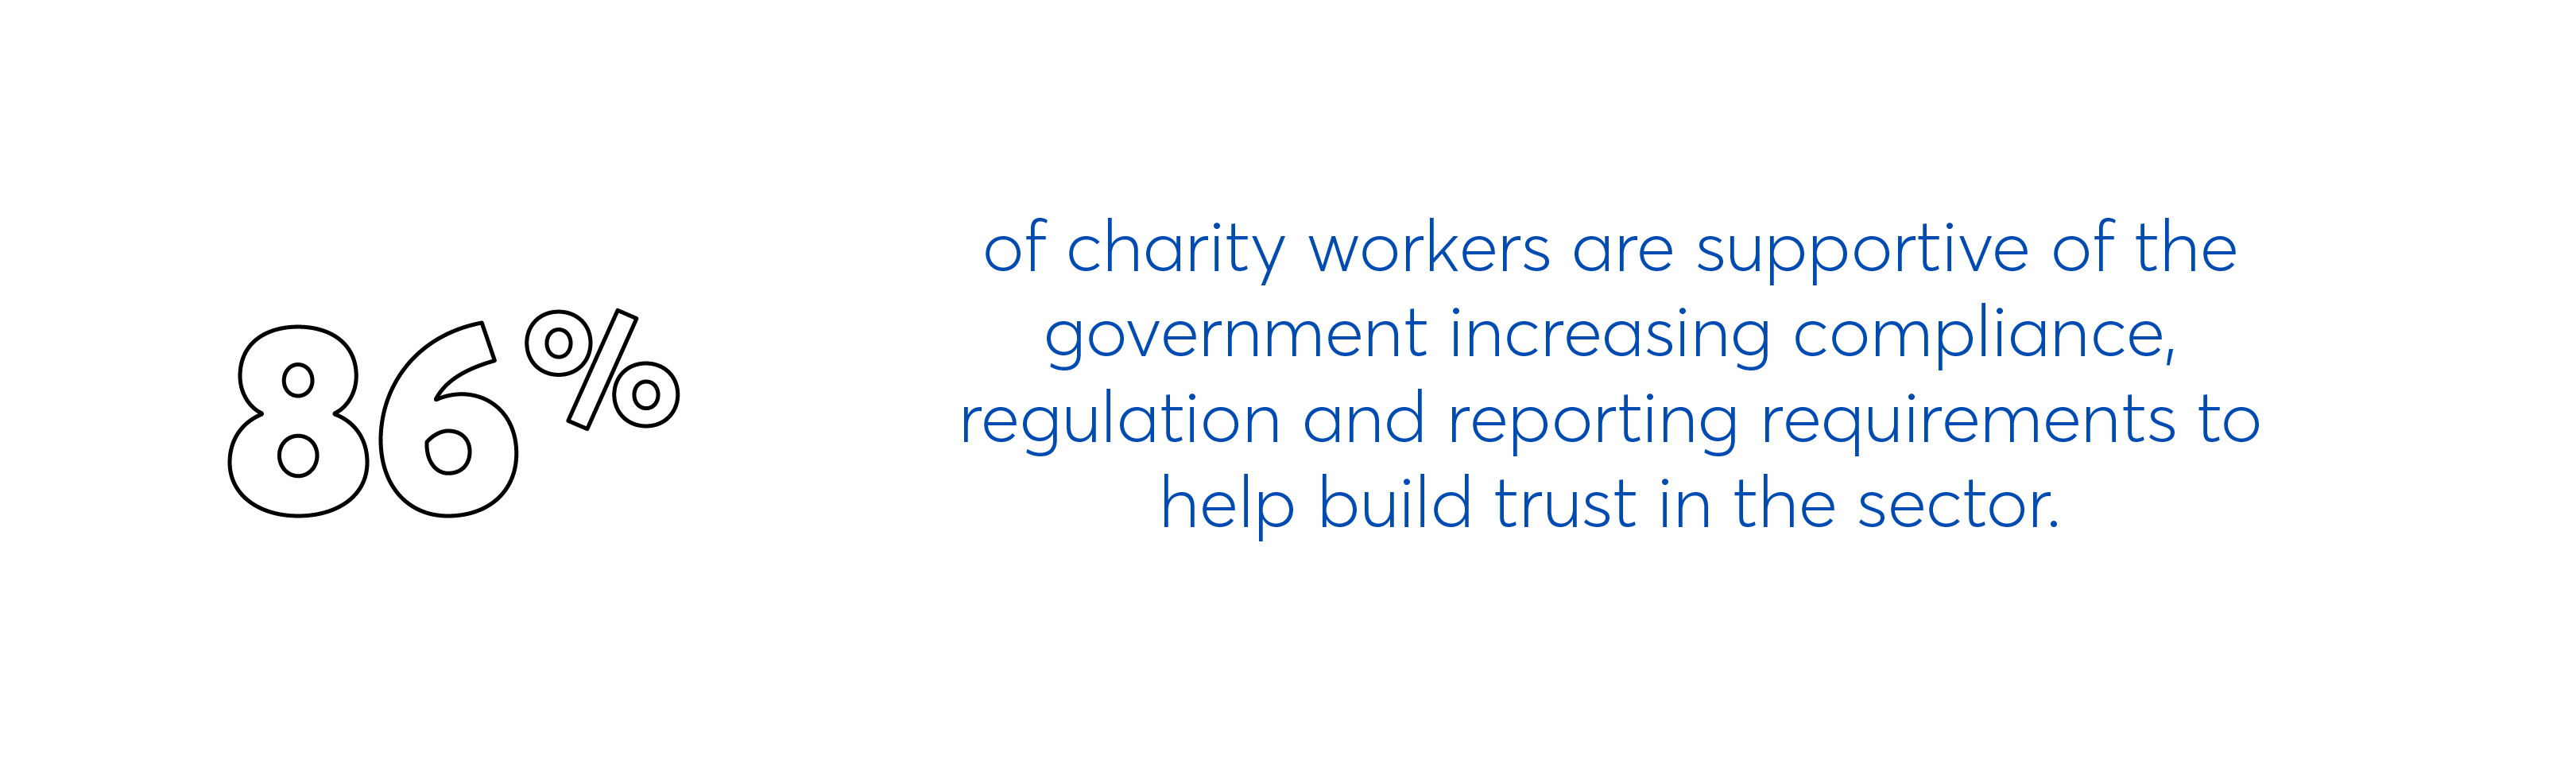 Increasing regulation and reporting help build trust